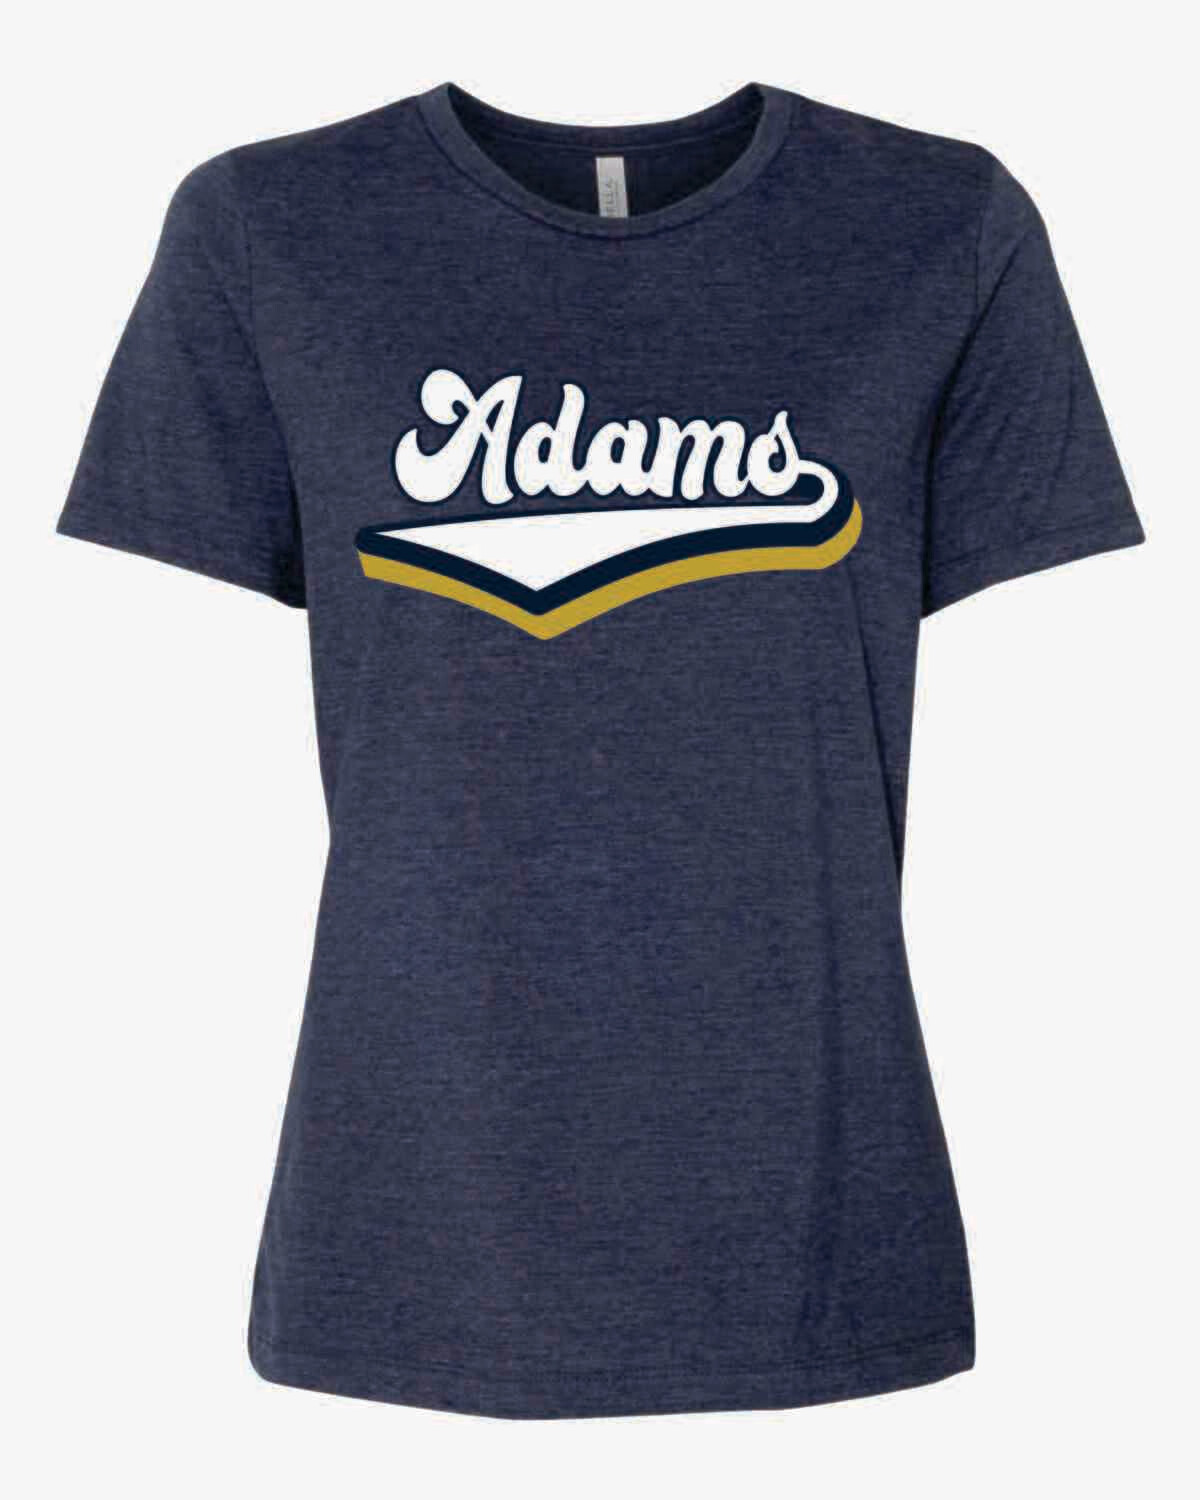 Adams T-Shirt - Heather Navy